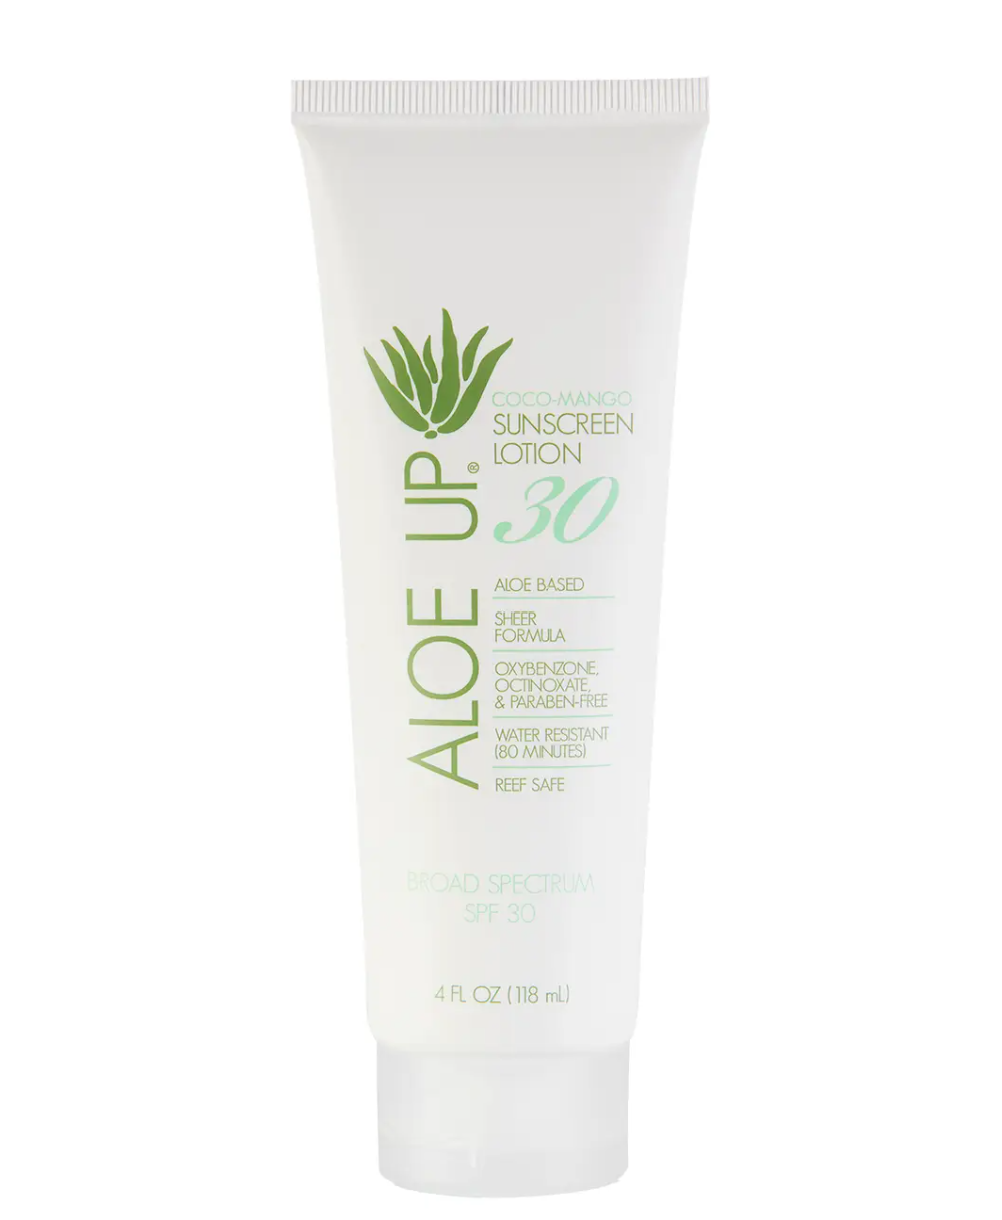 Aloe Based SPF 30 Sunscreen